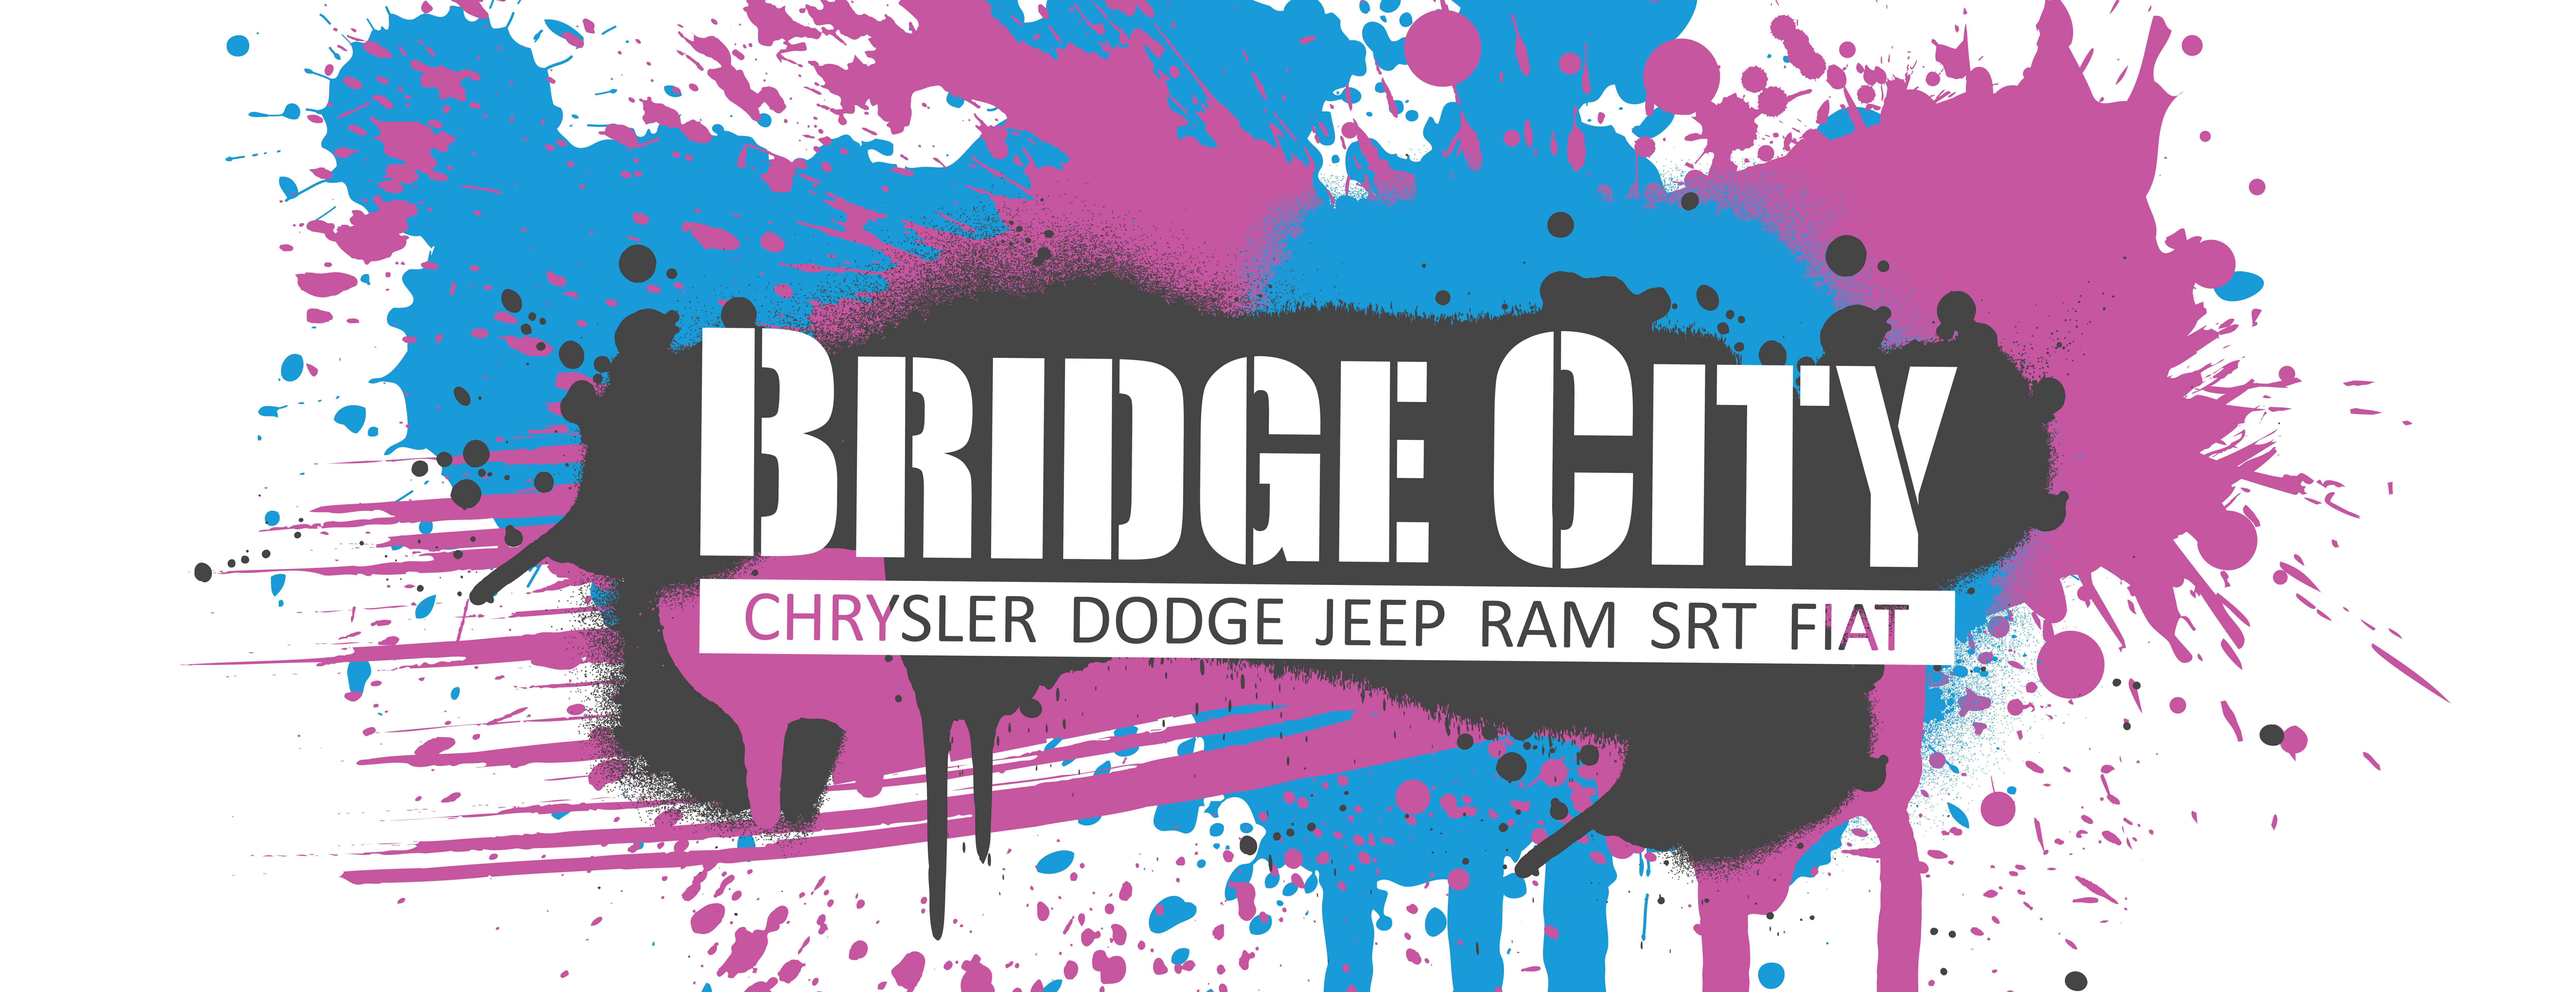 bridge city chrysler spray paint stencil logo